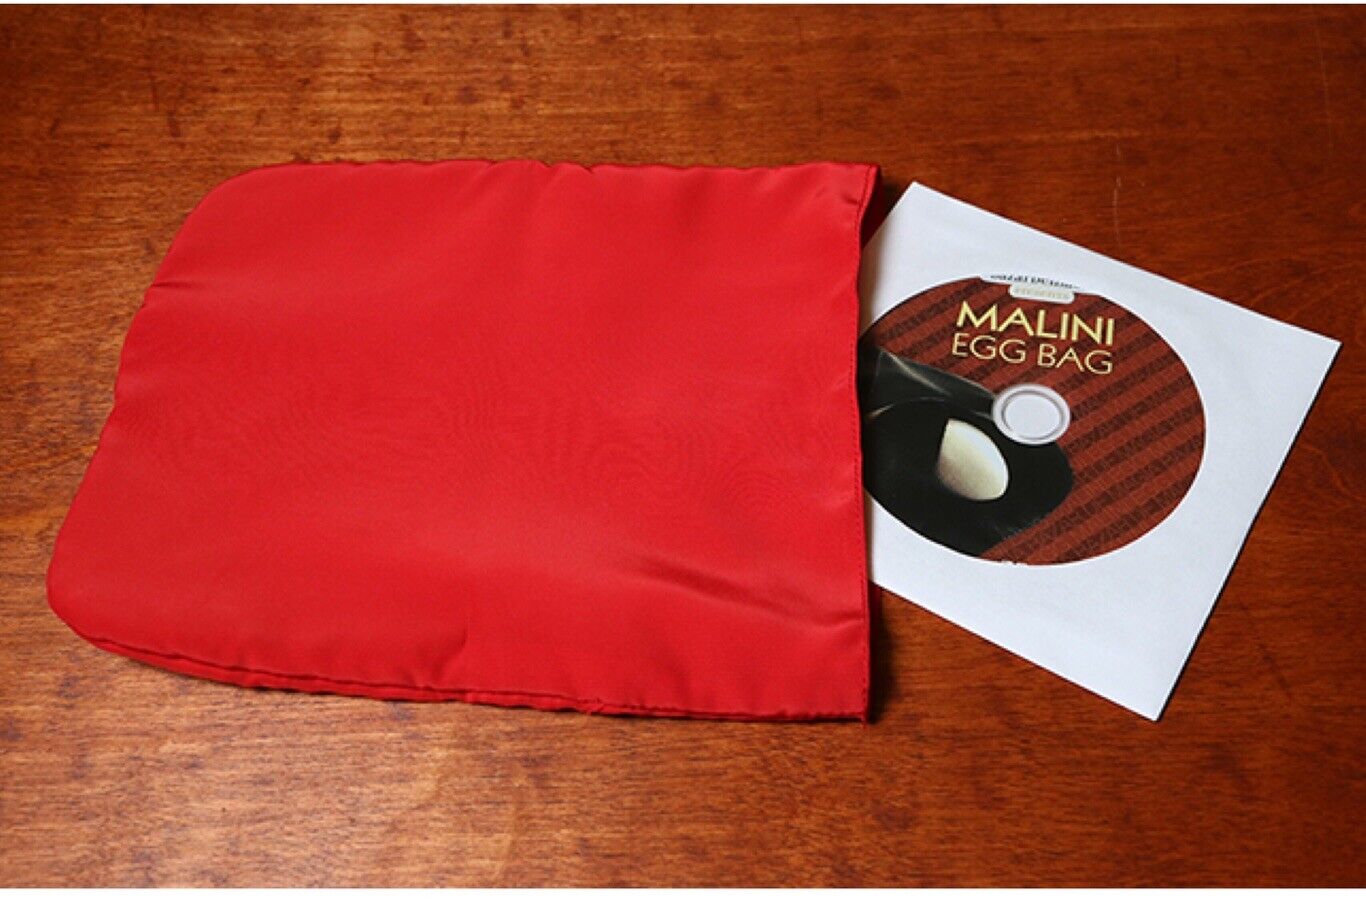 Malini Egg Bag and DVD - Red Bag Magic Trick Professional Quality